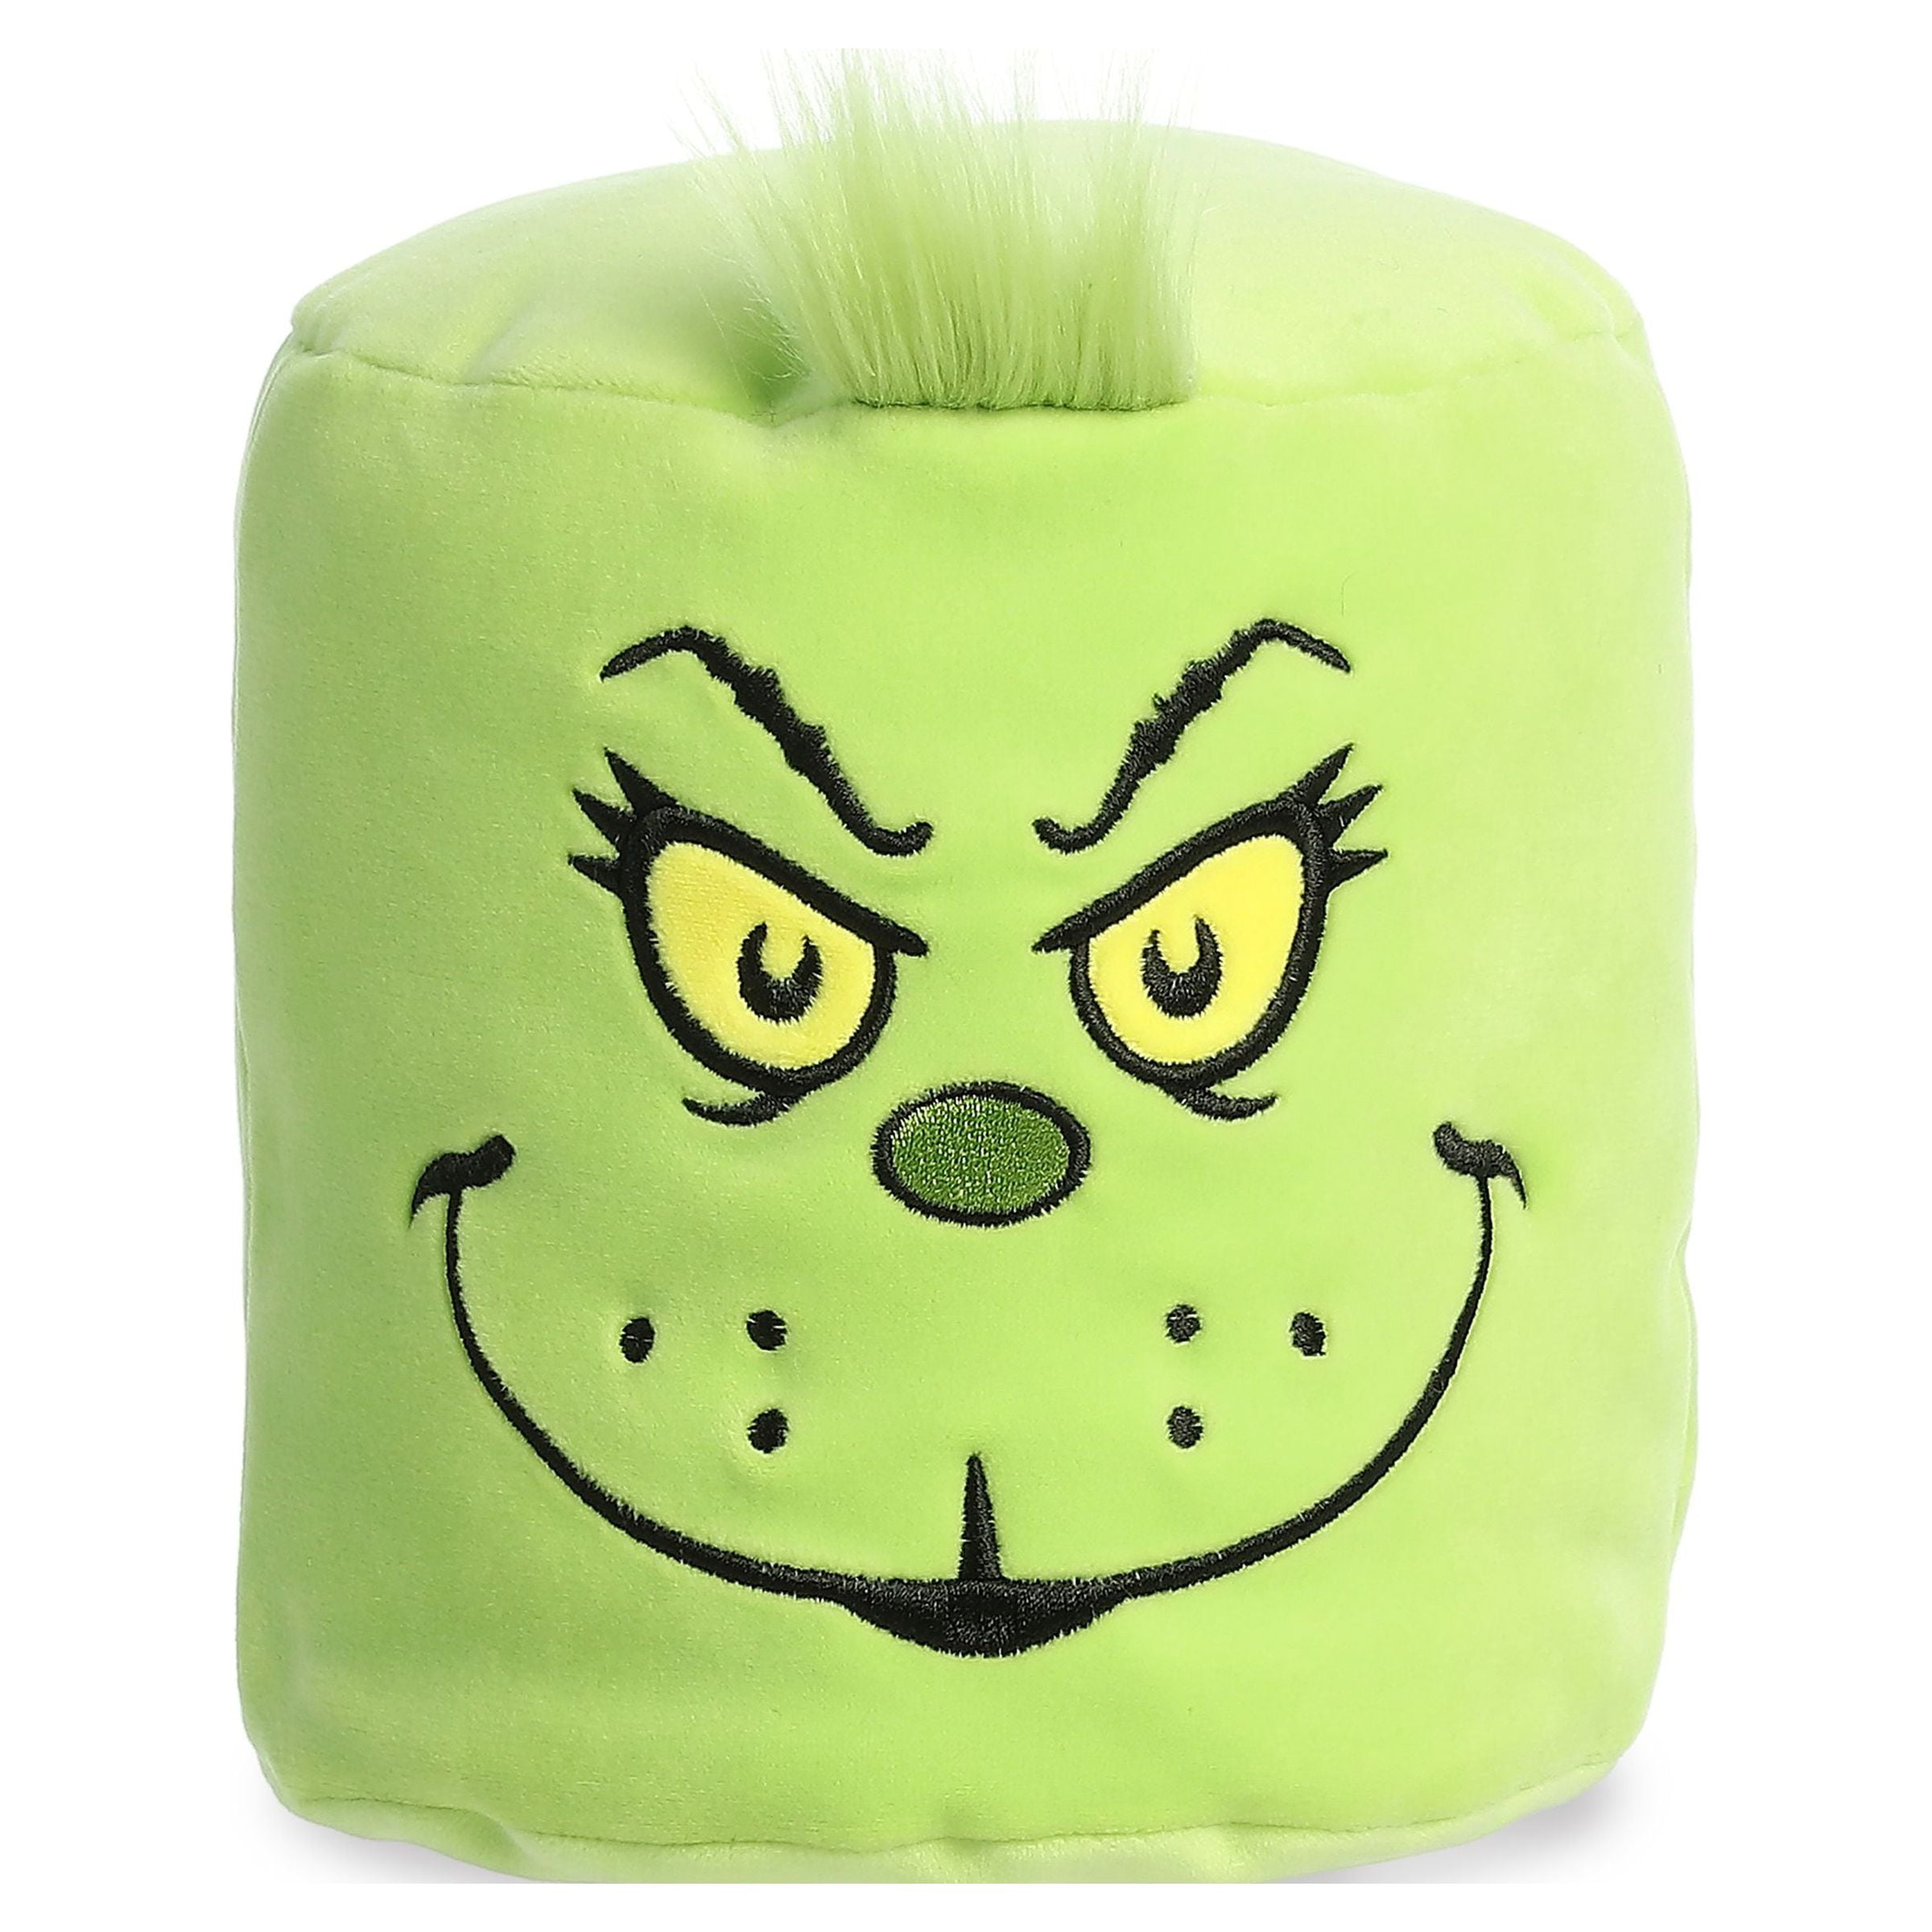 Aurora - Dr Seuss - 6 inch Grinch Mallow Plush, Green